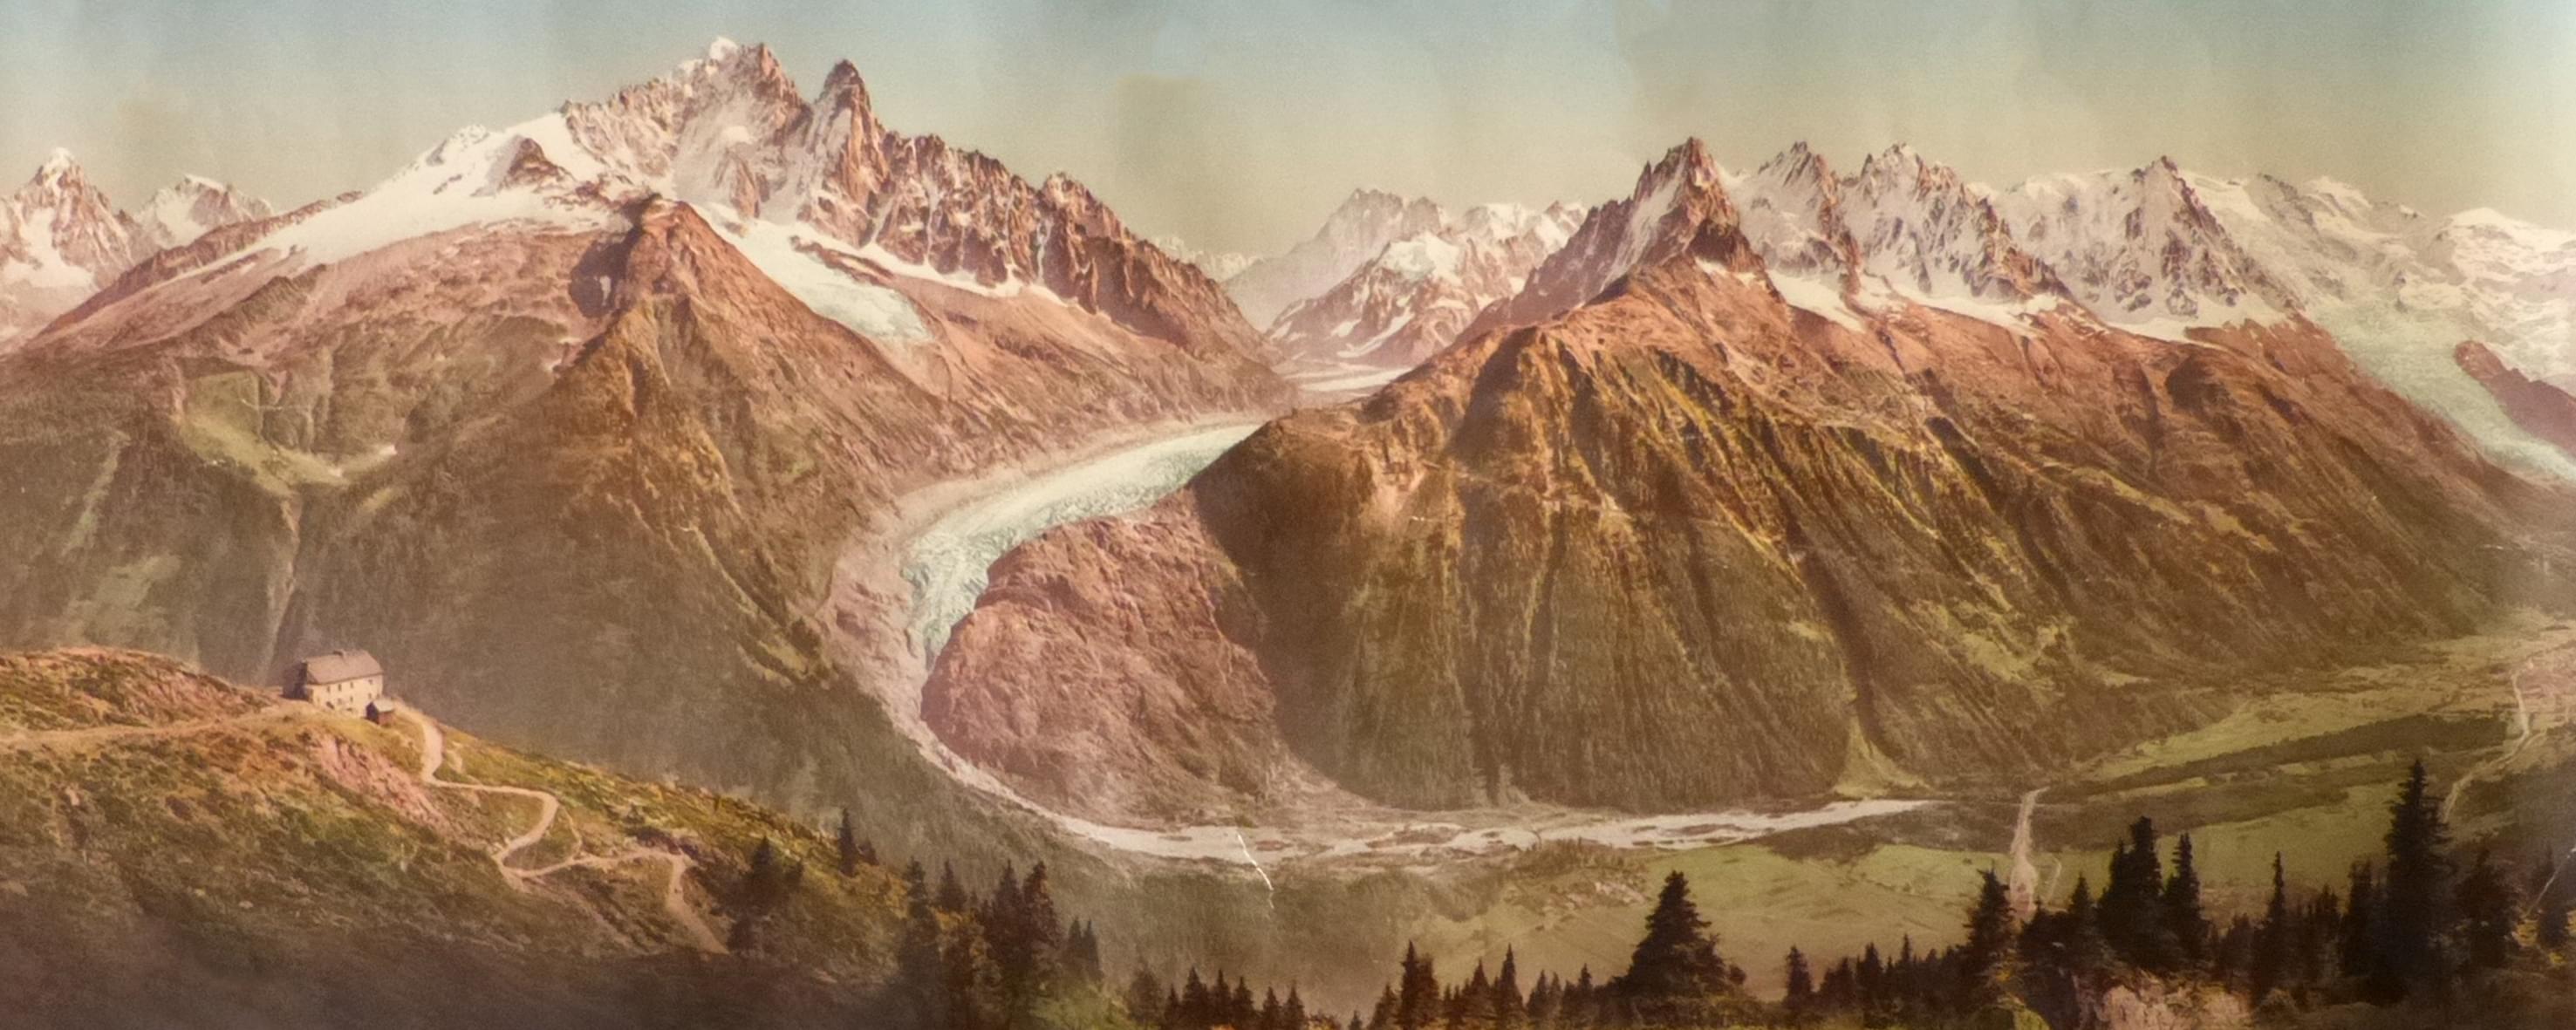 1920-1930 - 2015.0.183 - Mer de glace - Musee Alpin - serie